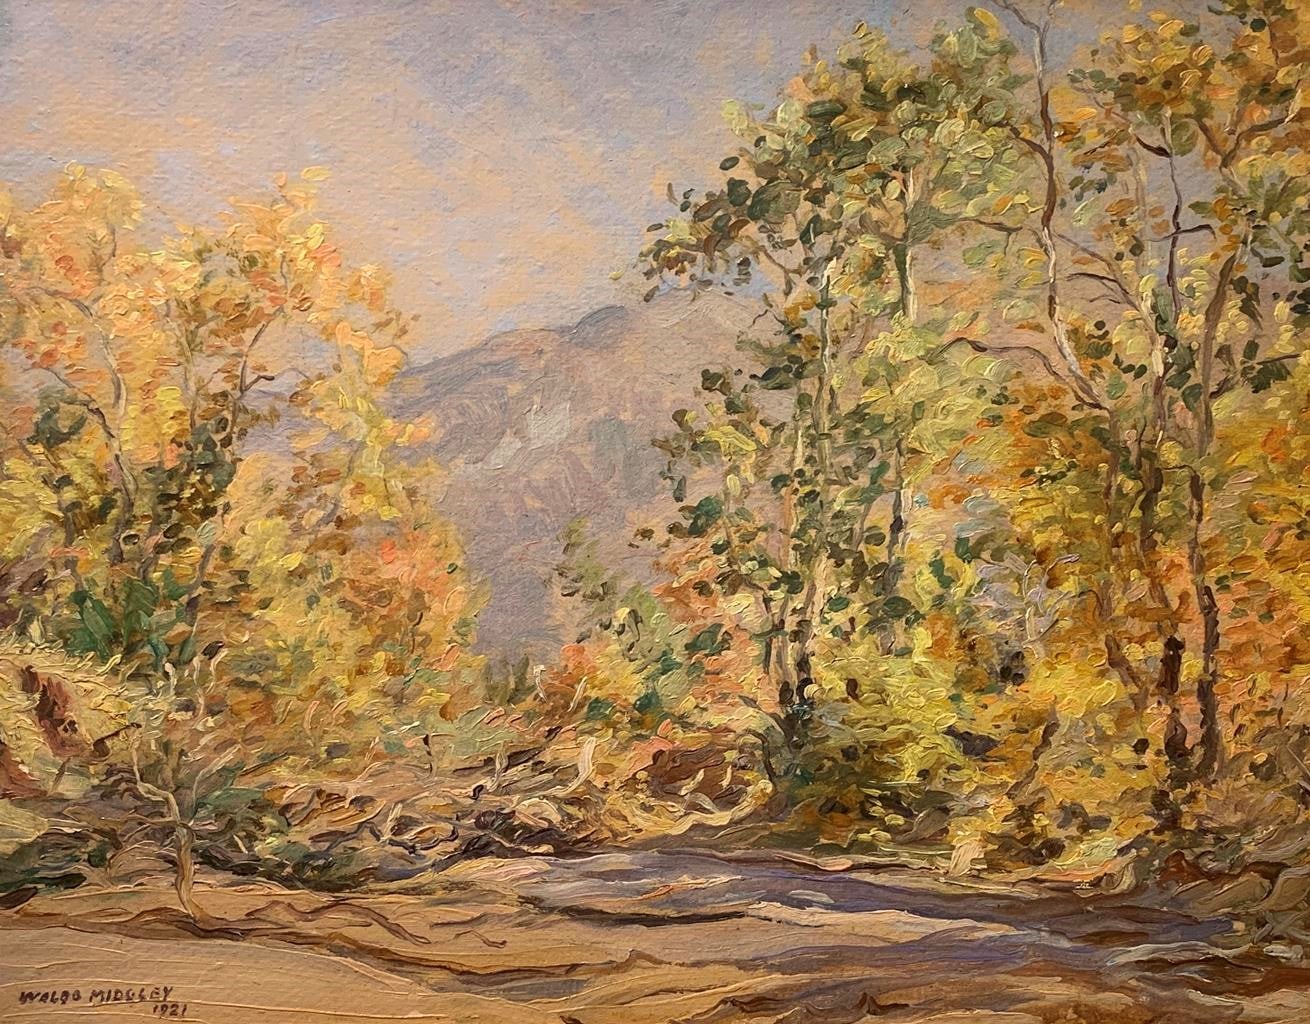 Waldo Midgley, utah historical artist, landscape